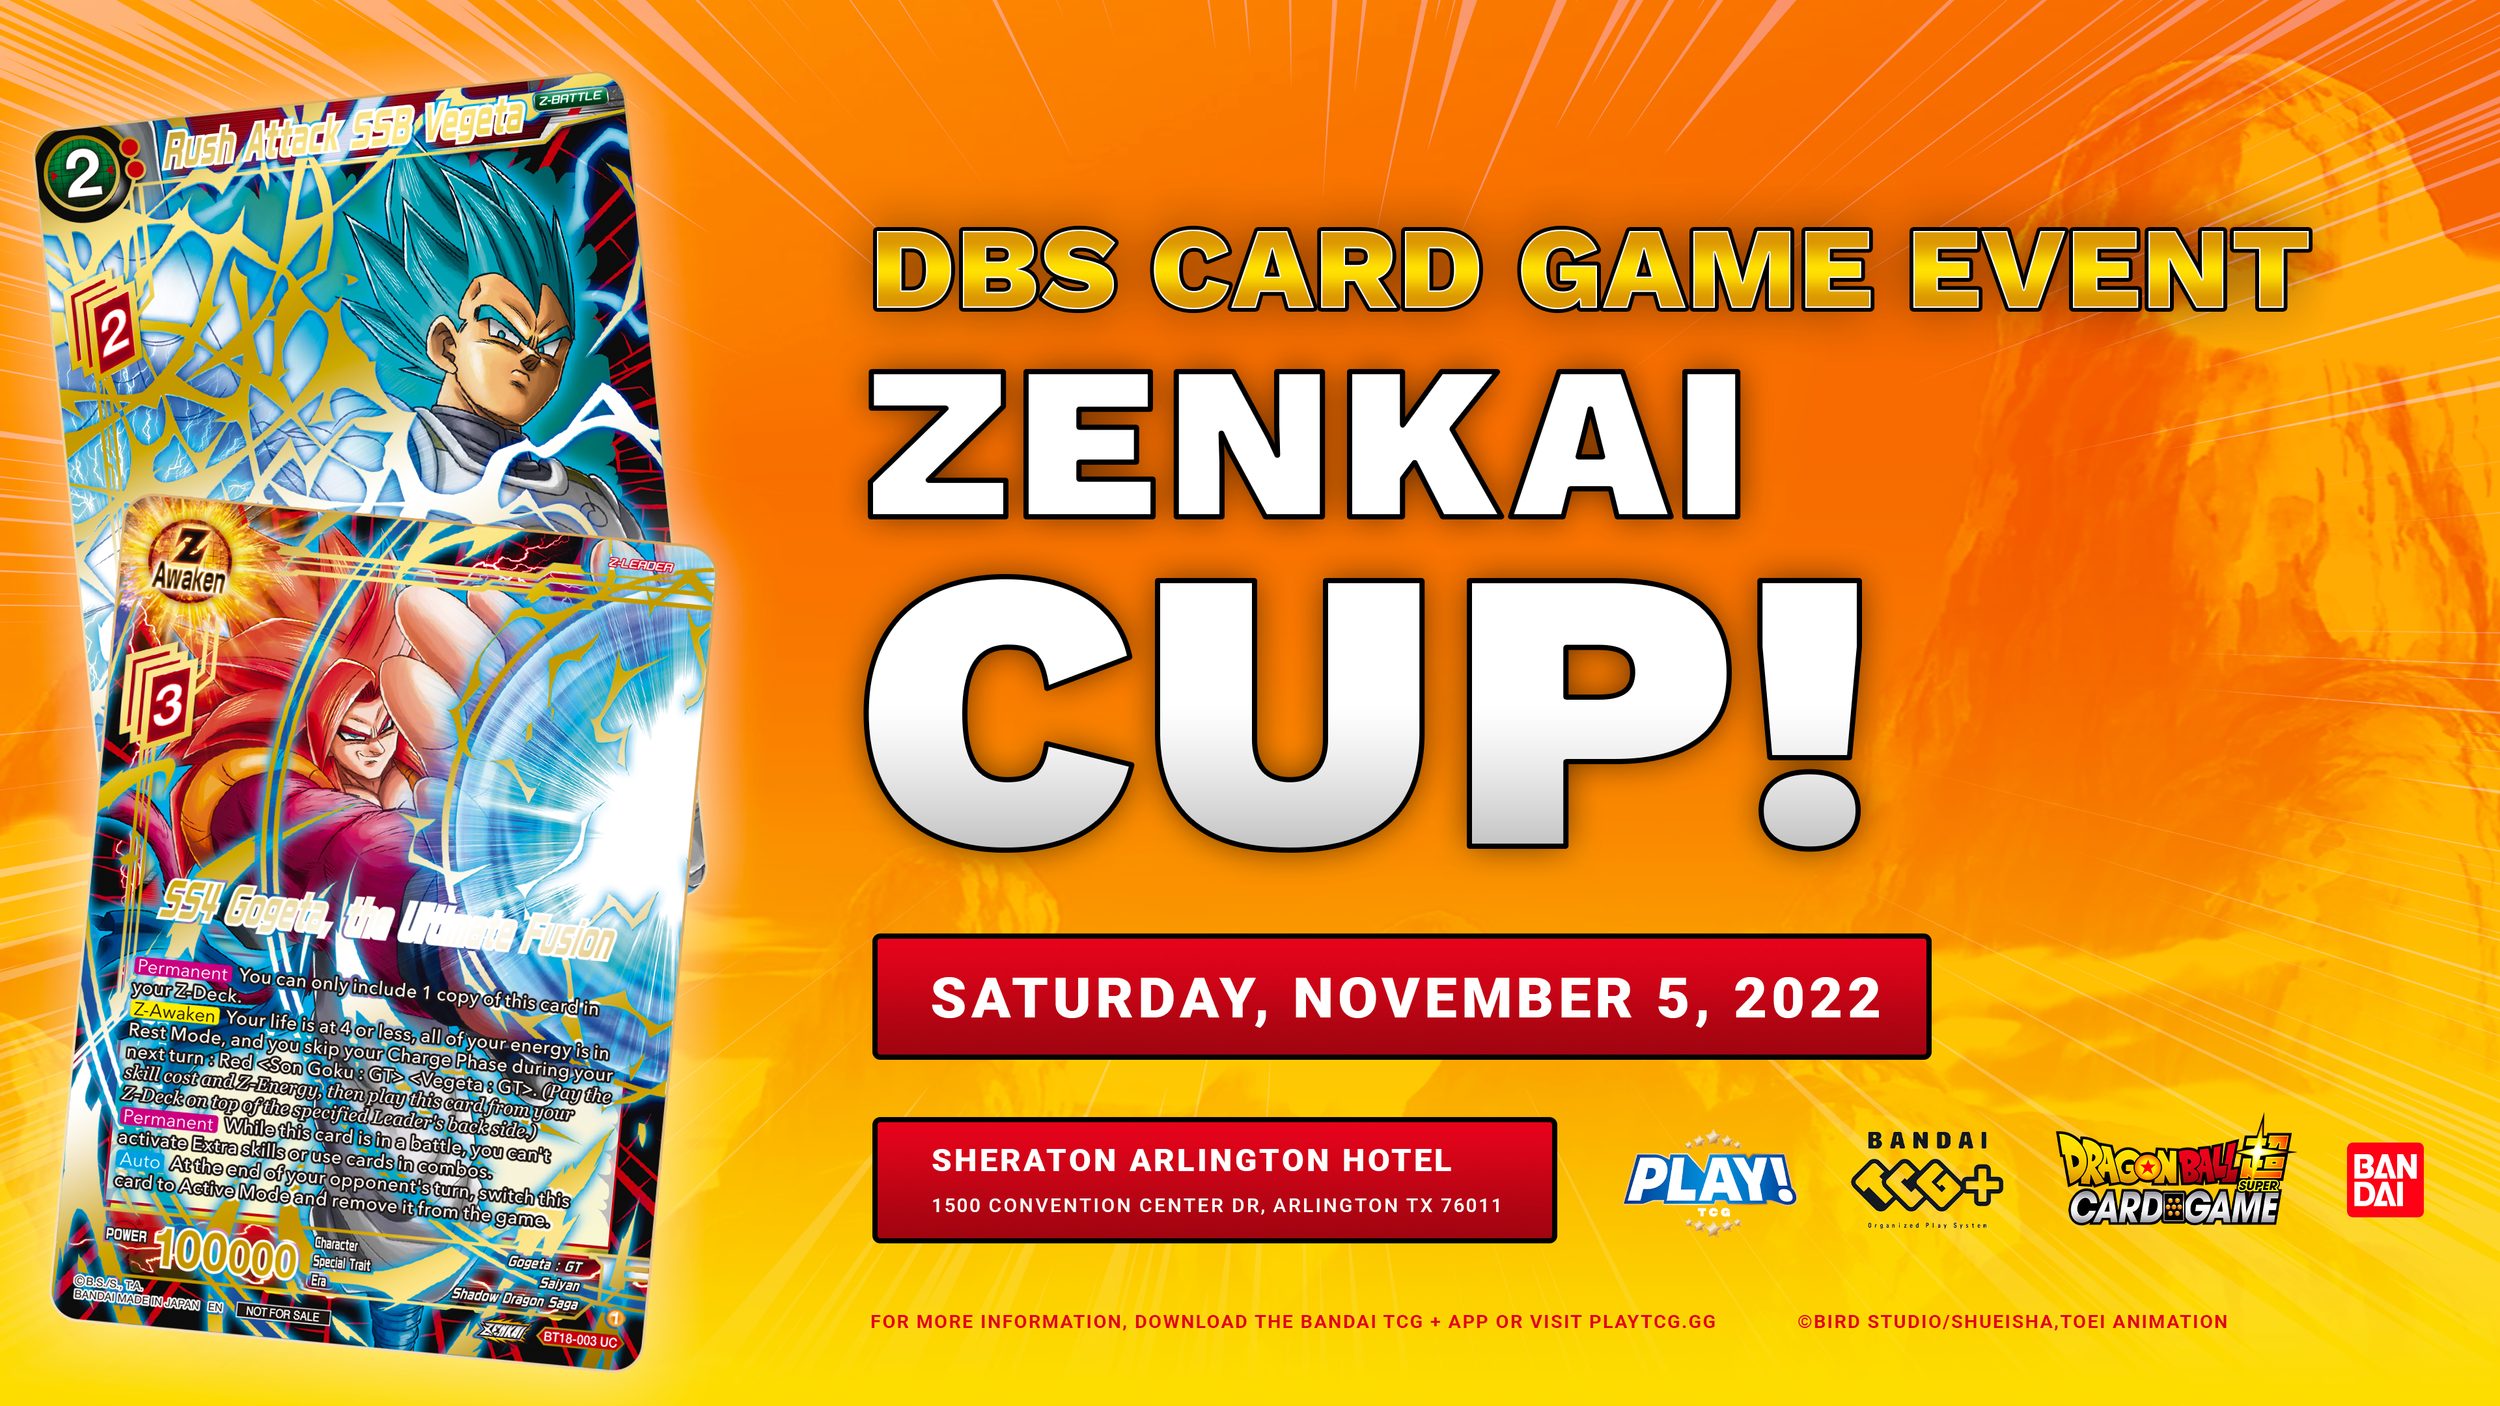 Dragon Ball Super - Online Zenkai Cup — Play!TCG